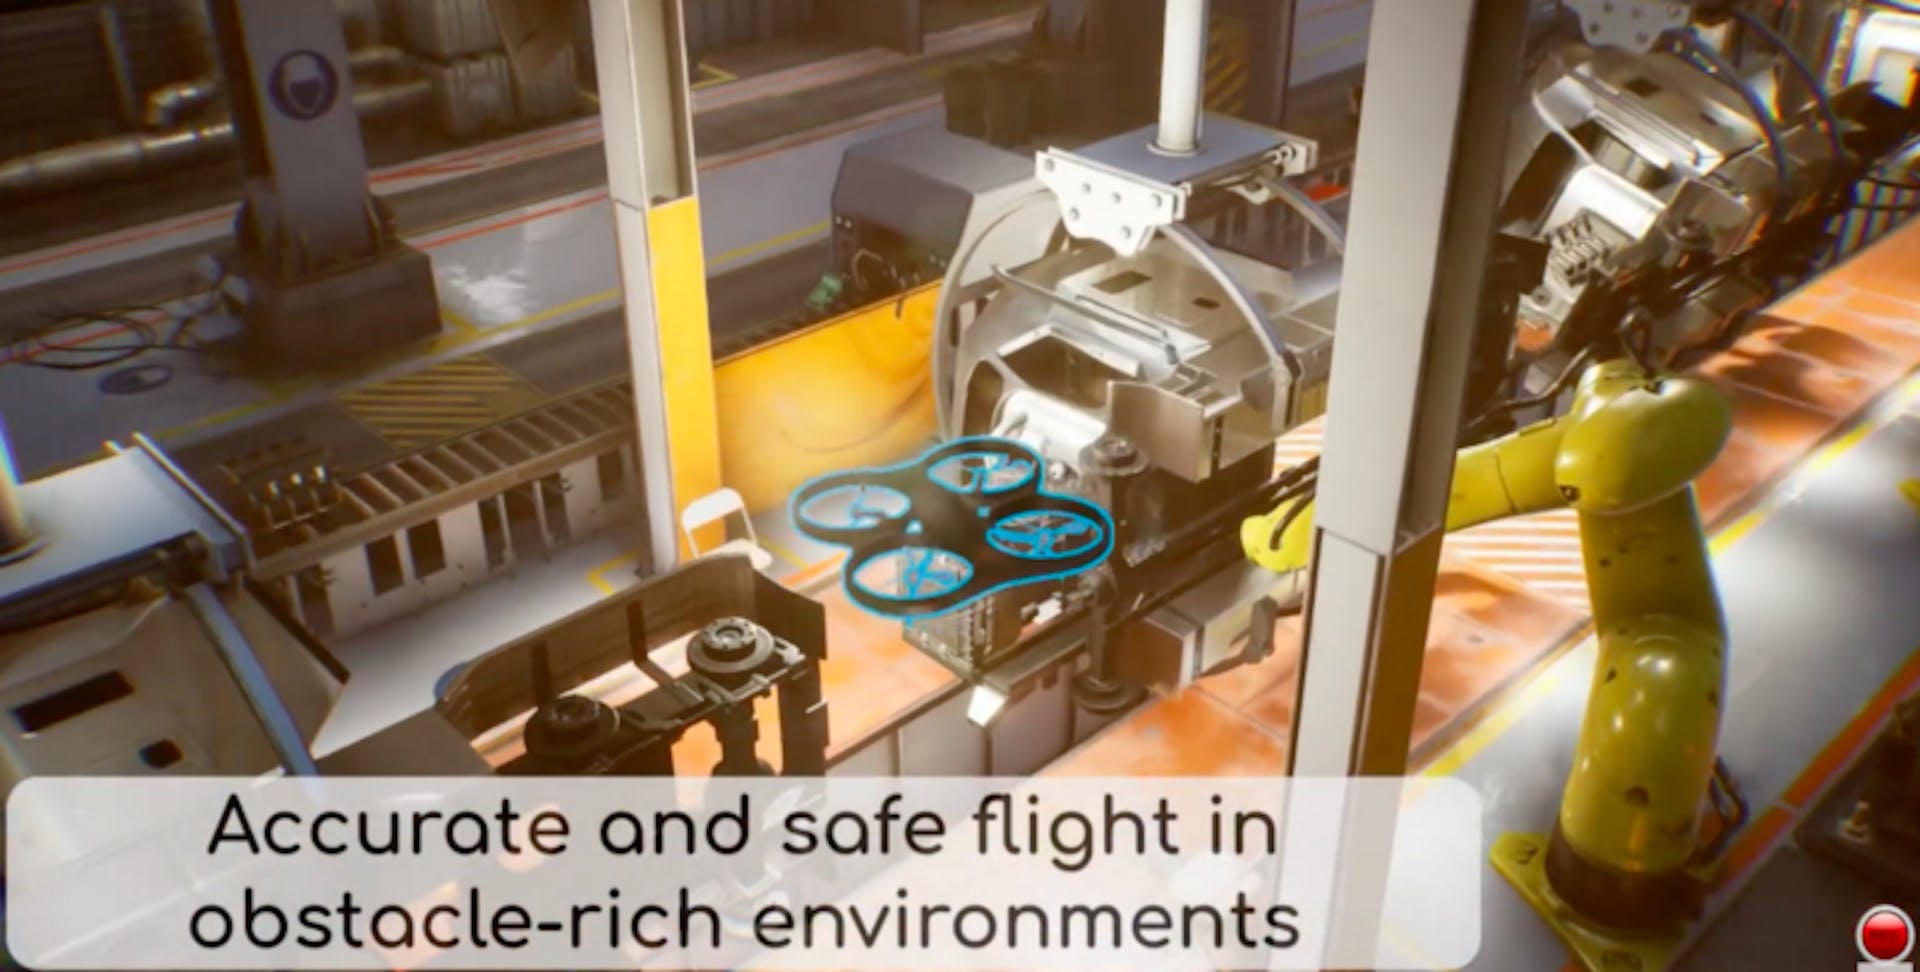 Indoors Inspection using latest computer vision technologies by Autonomous Drones. Source: ARTIAL MVP video